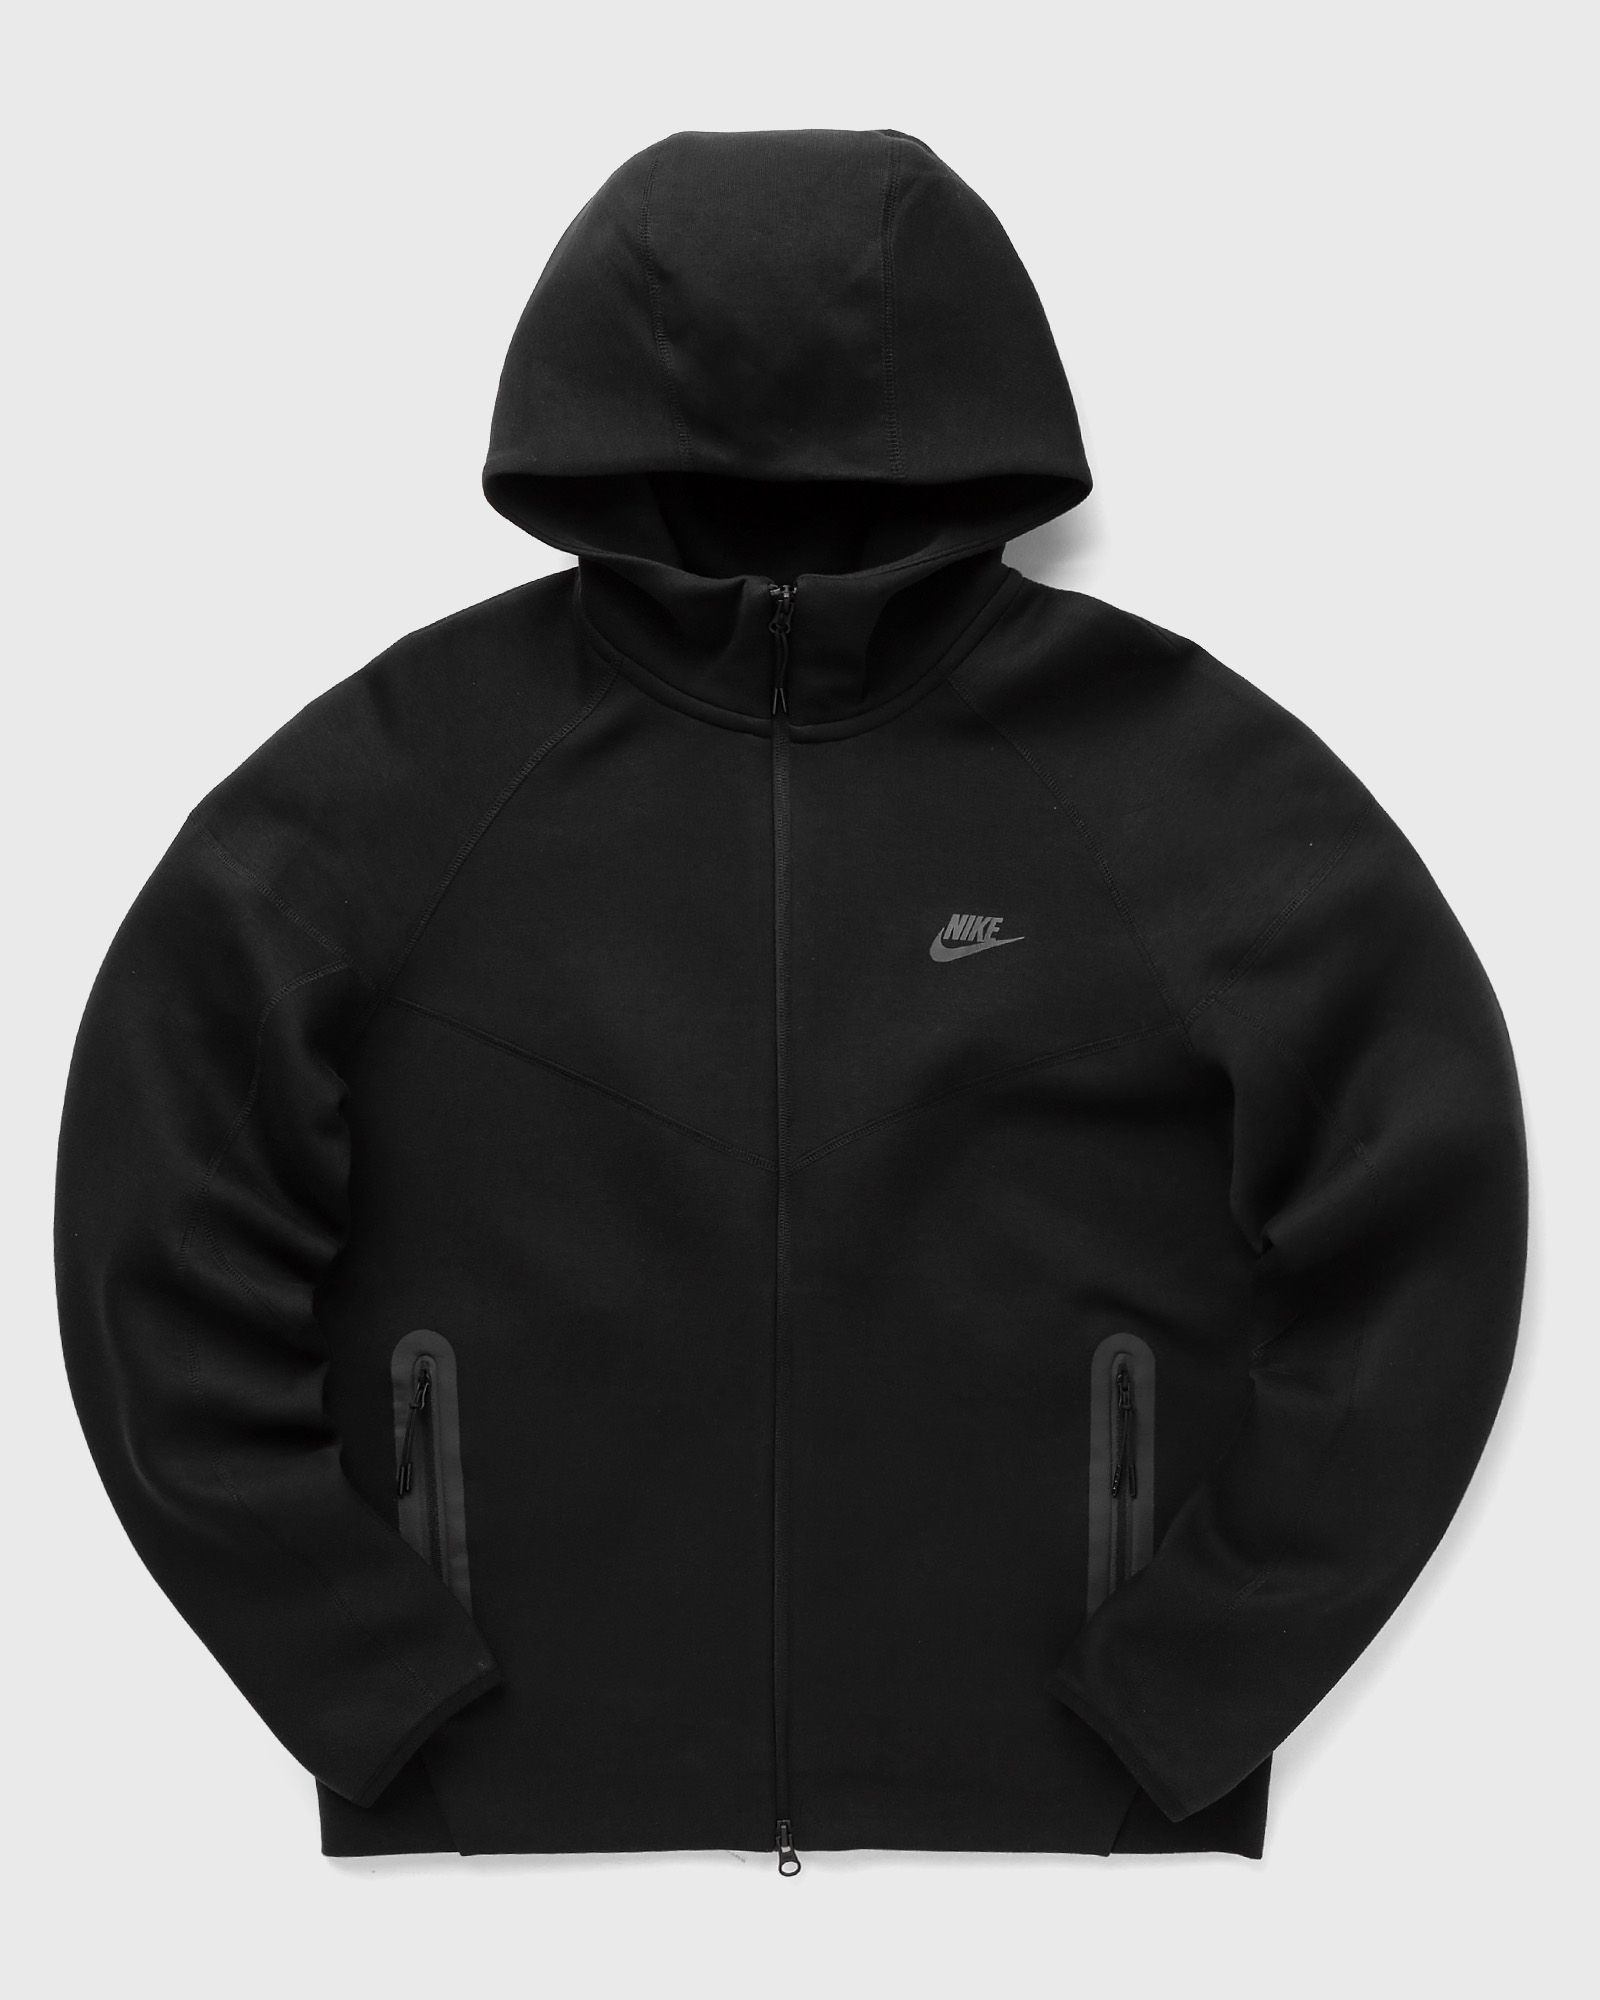 Nike Sportswear Tech Fleece Windrunner Full-Zip Hoodie men Hoodies|Zippers black in Größe:M von Nike